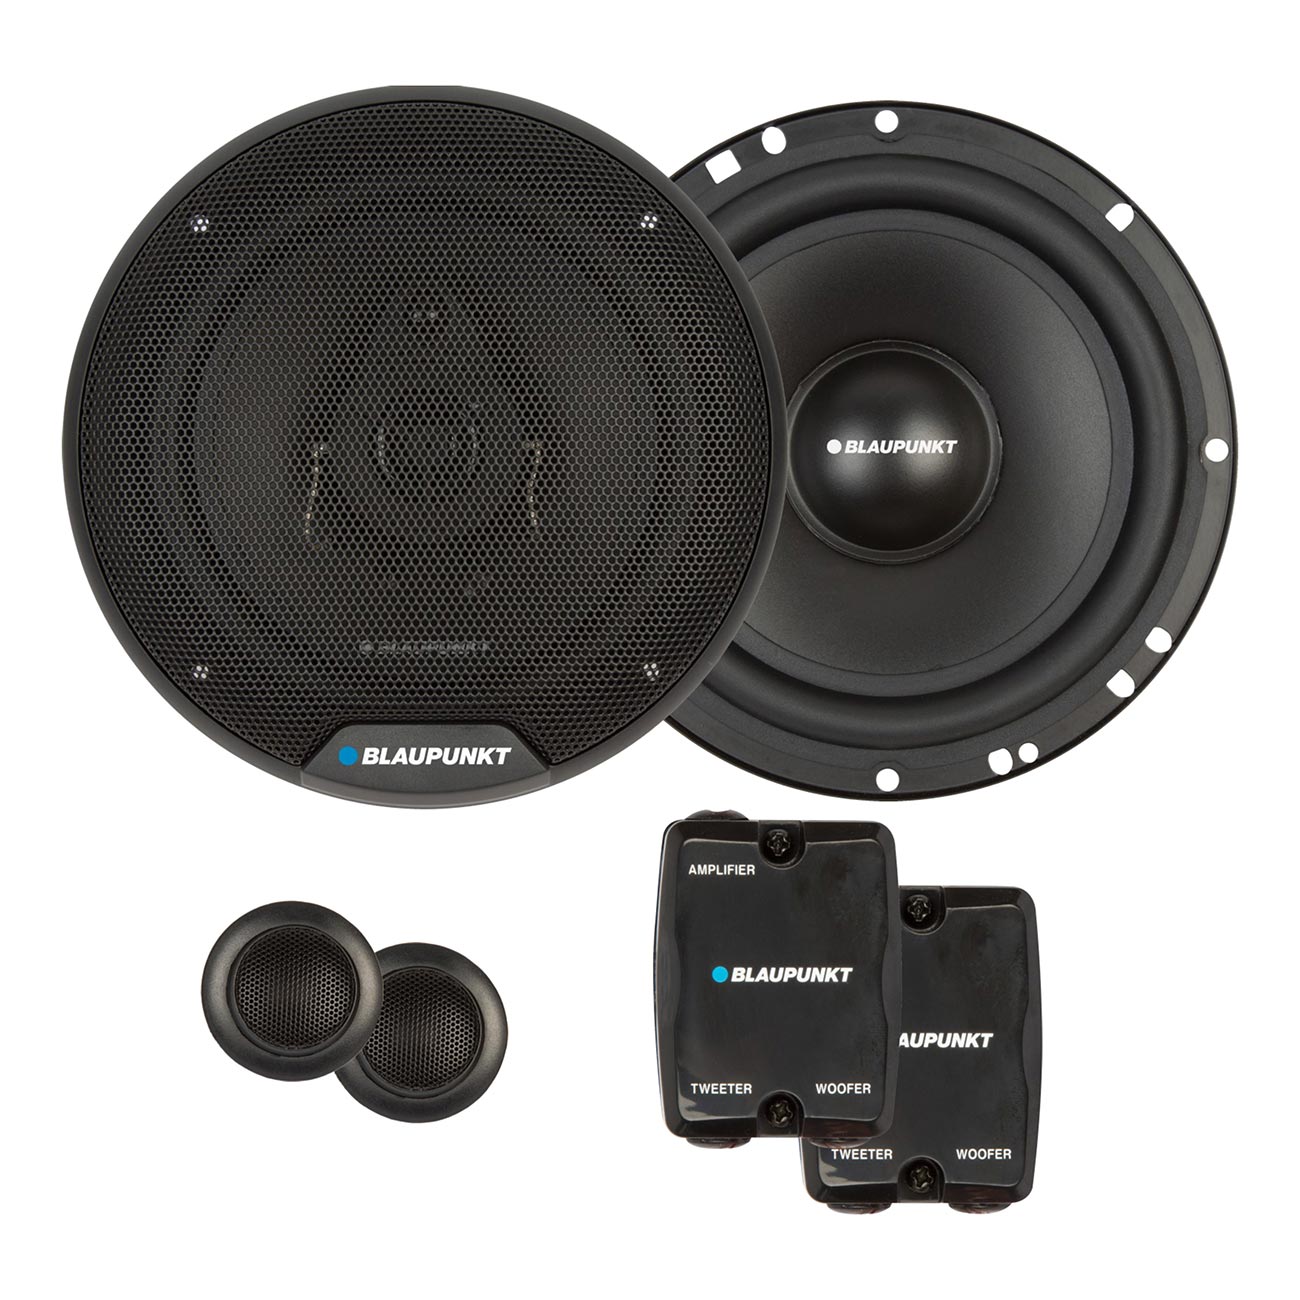 Blaupunkt E-Series 6.5" Component Speaker System 30WRMS / 60W Max